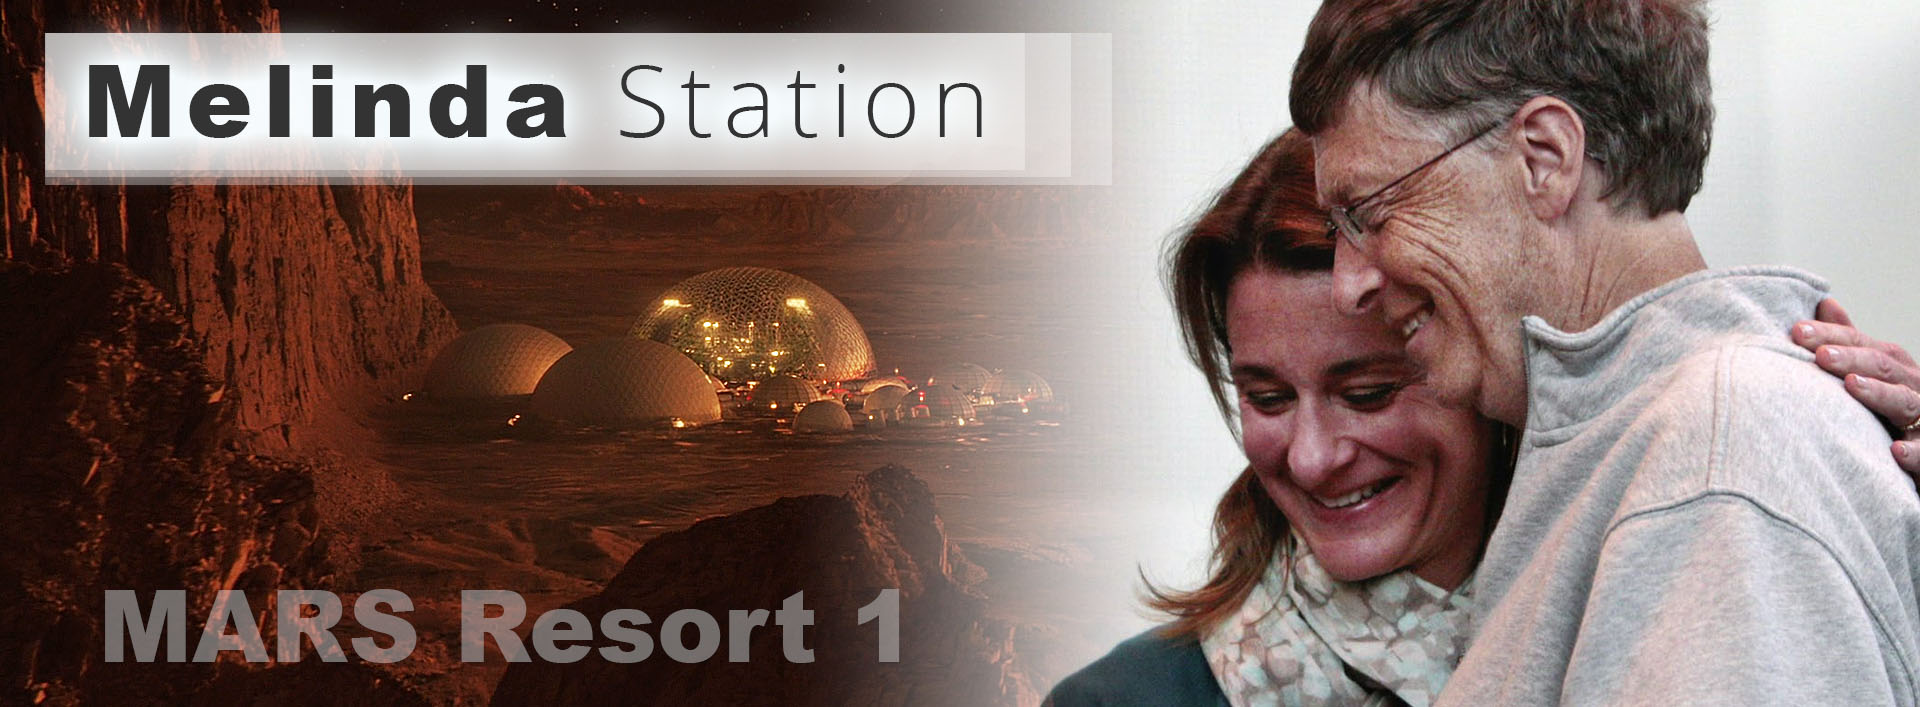 MARS-Resort-1__Melinda-Station